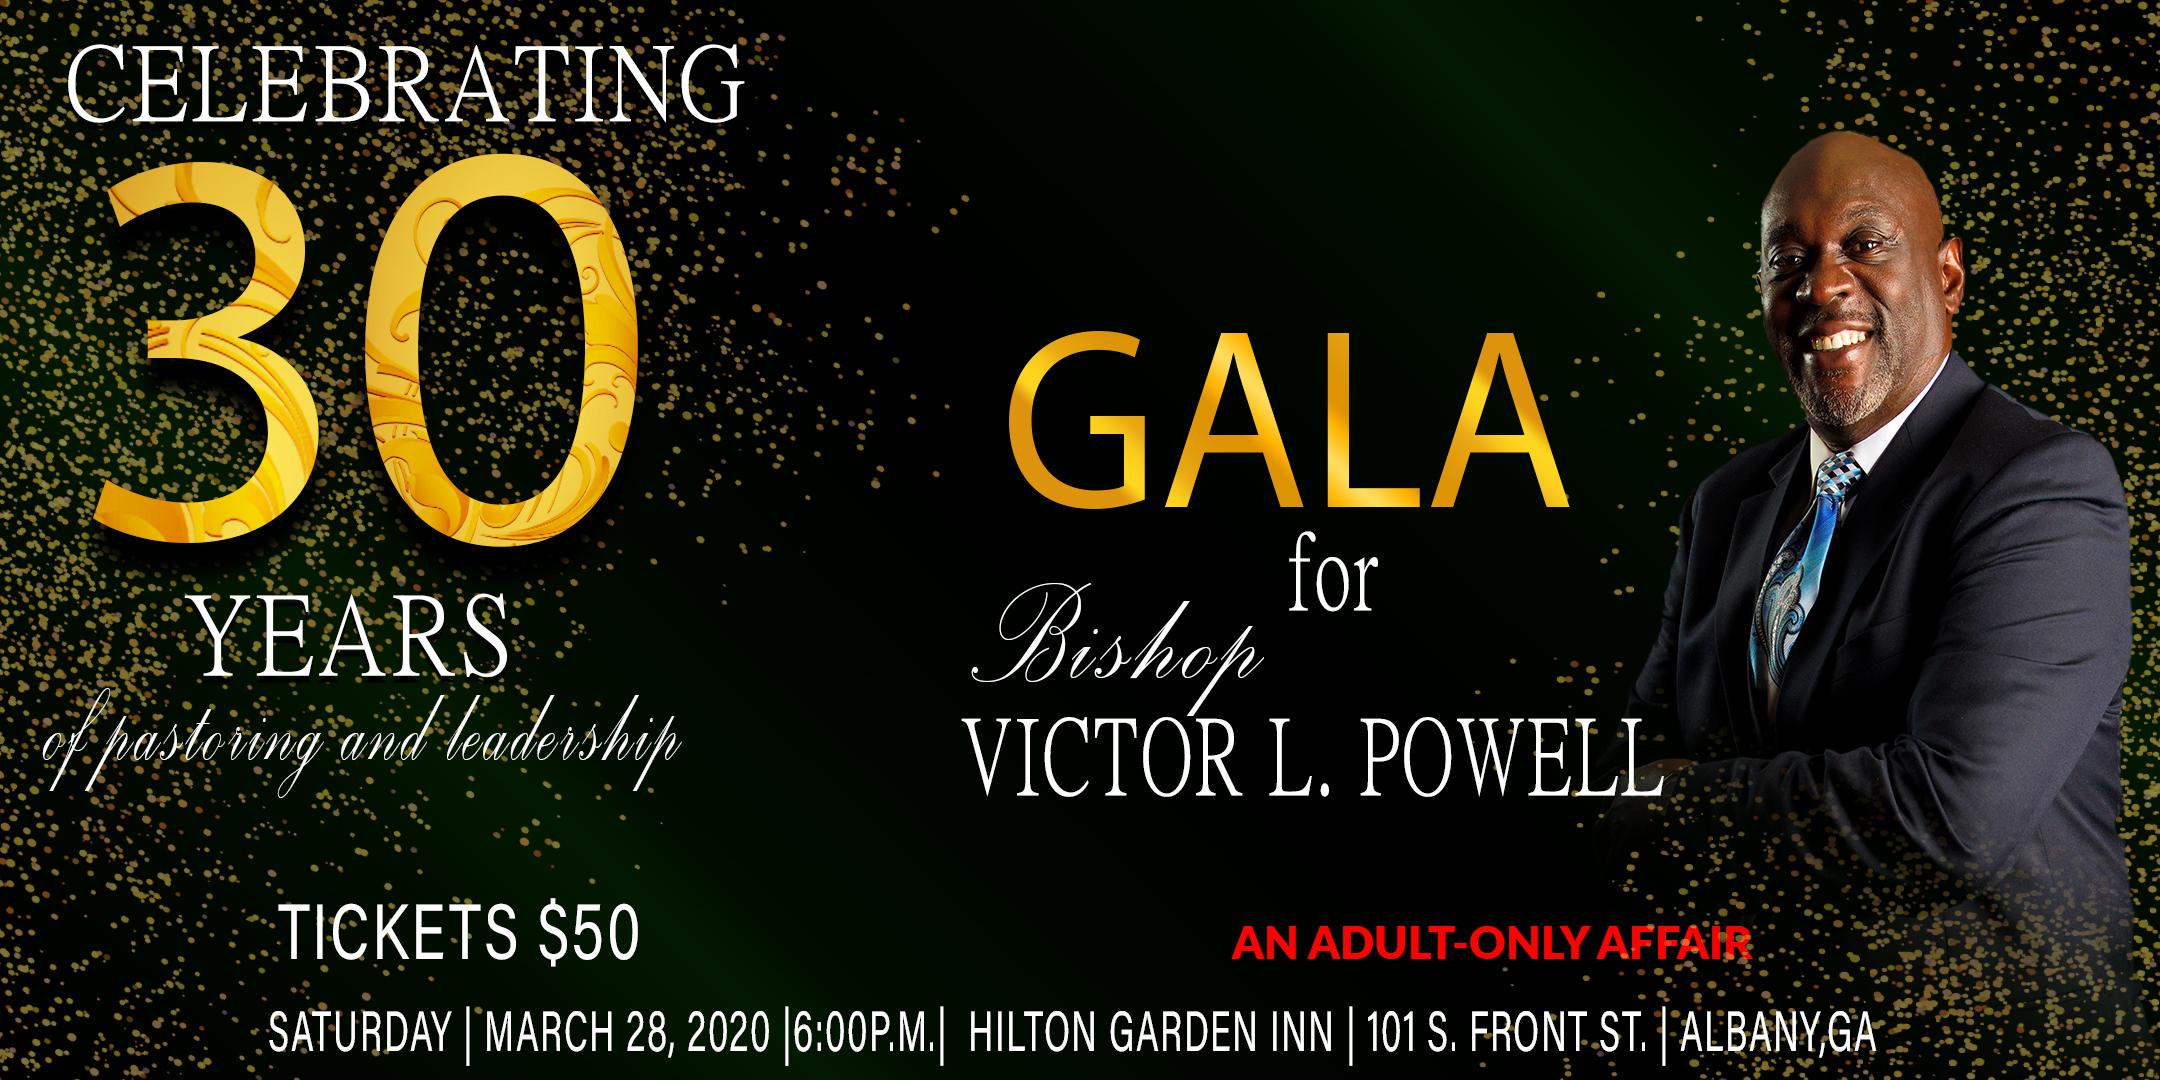 Bishop Victor L Powell S 30th Year Anniversary Gala 28 Mar 2020